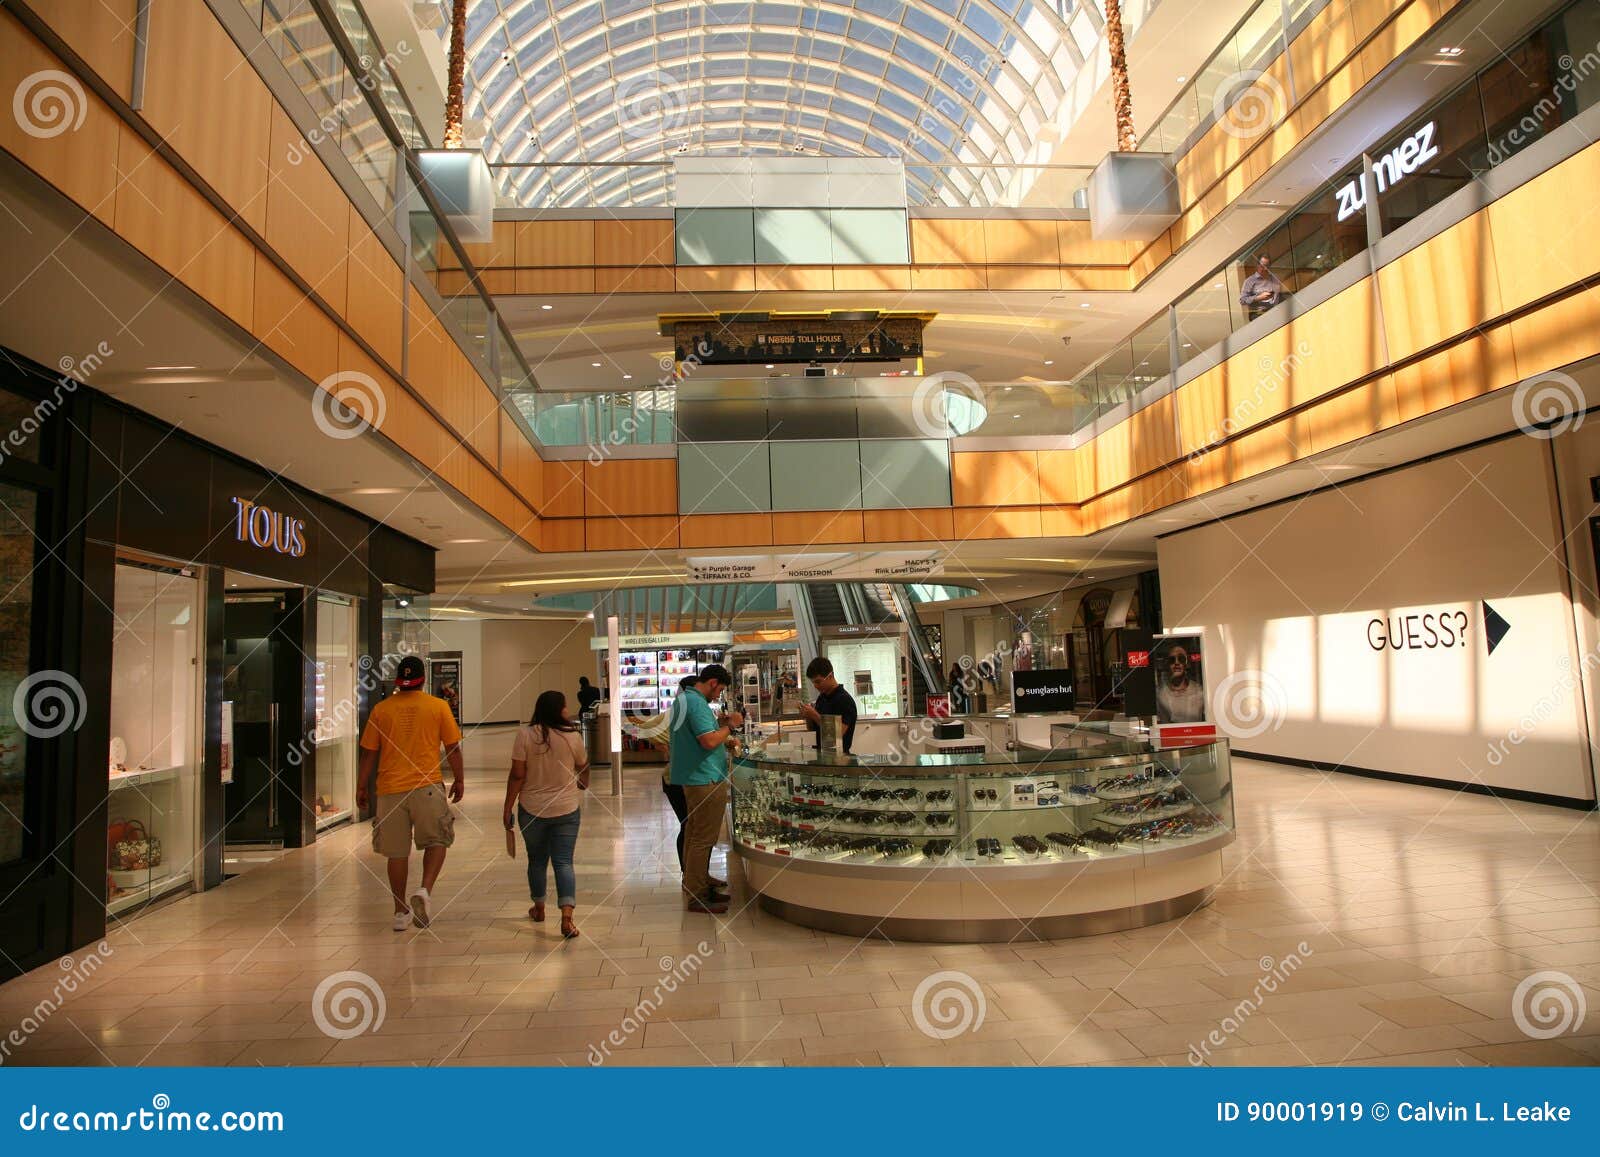 Galleria Dallas - Dallas, Texas